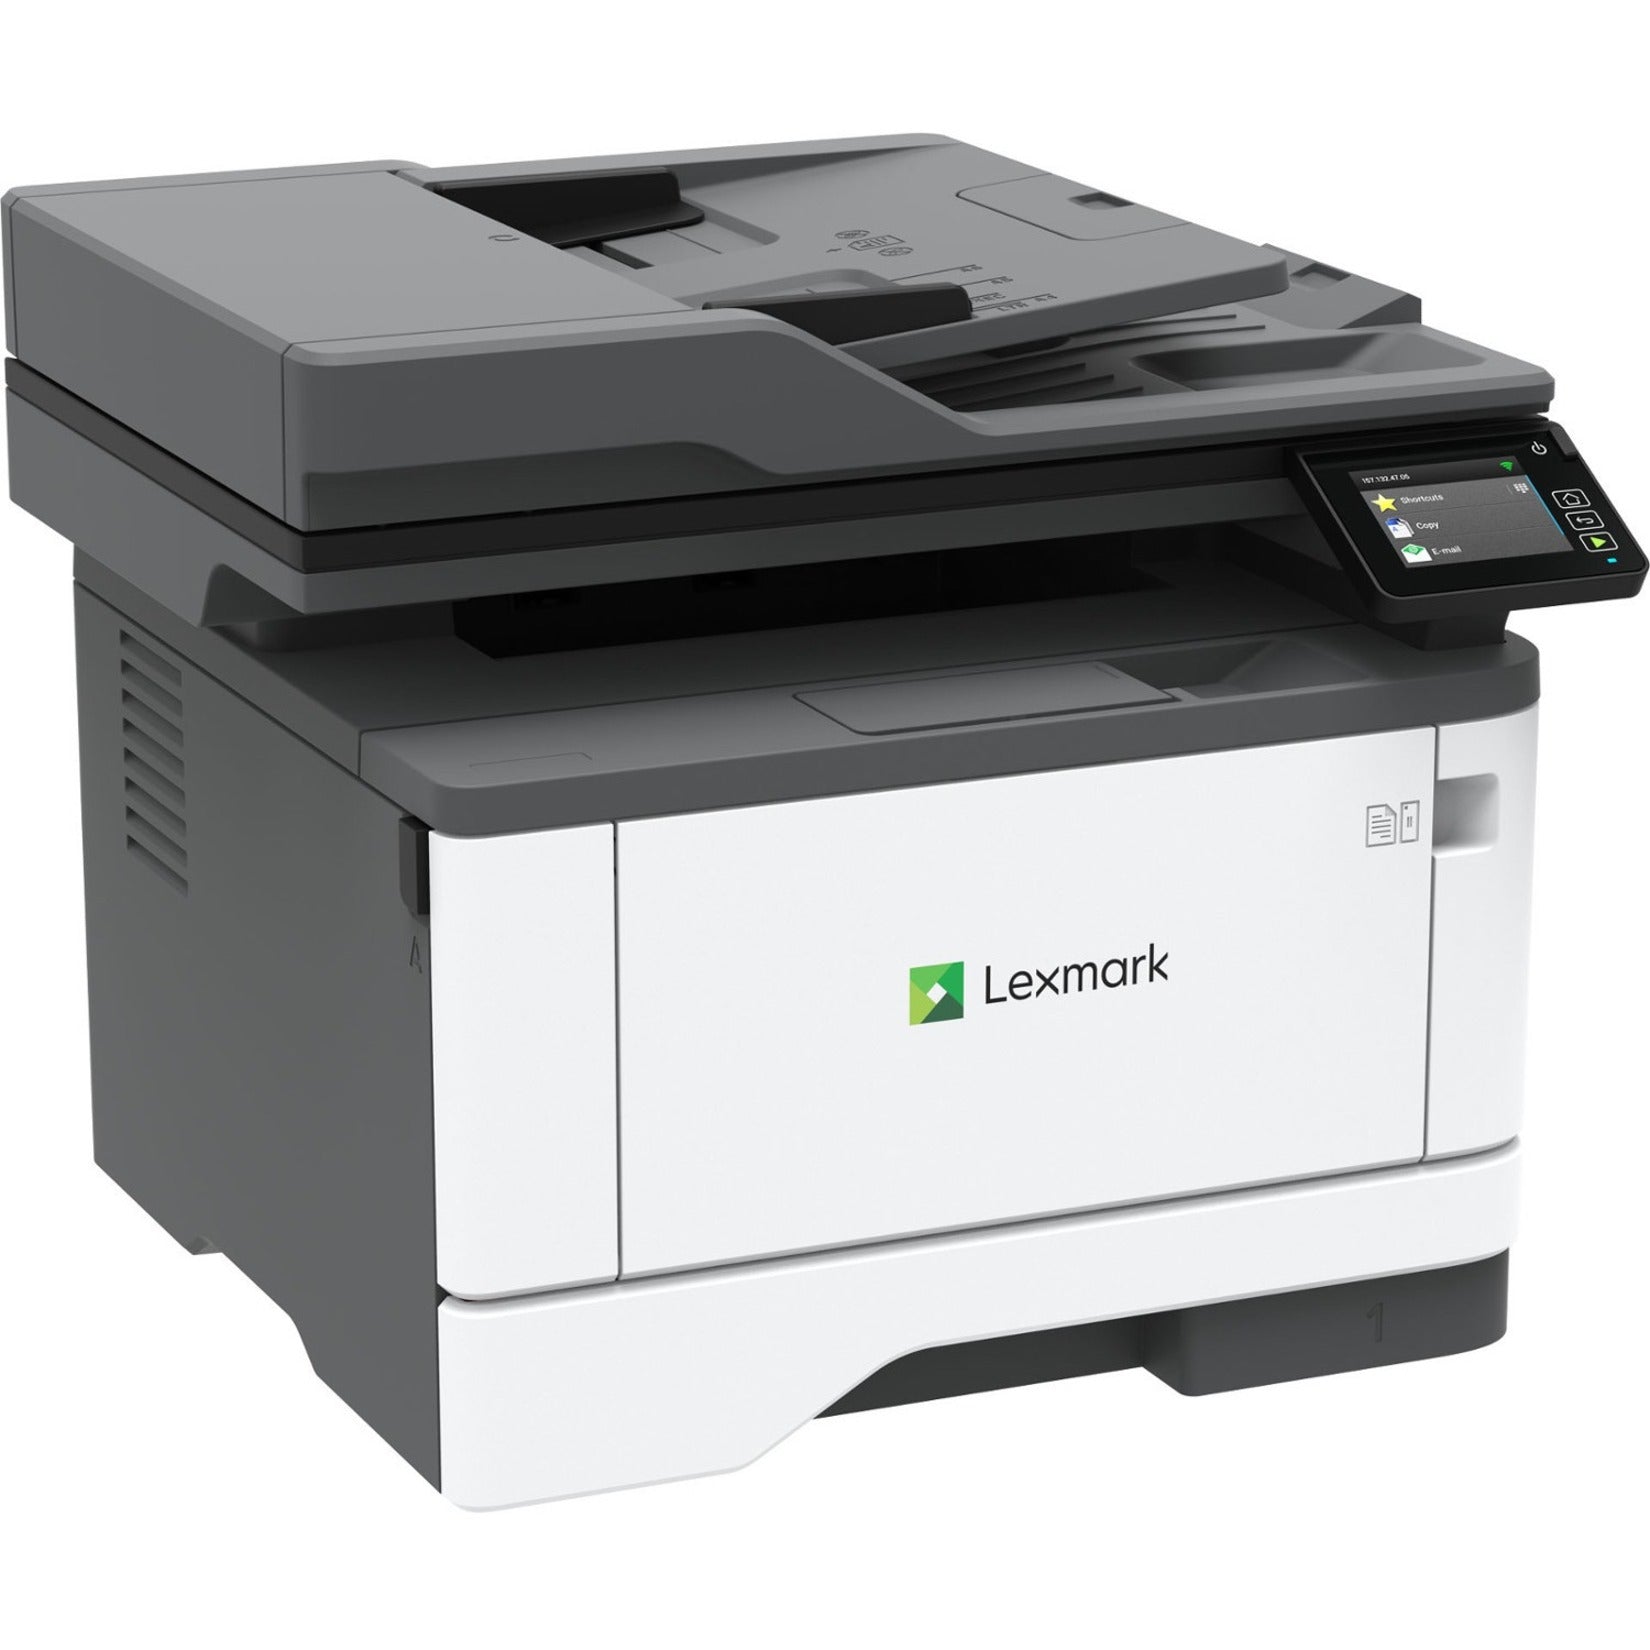 Lexmark 29S0200 MX431adn Laser Multifunction Printer, Monochrome, Plain Paper Print